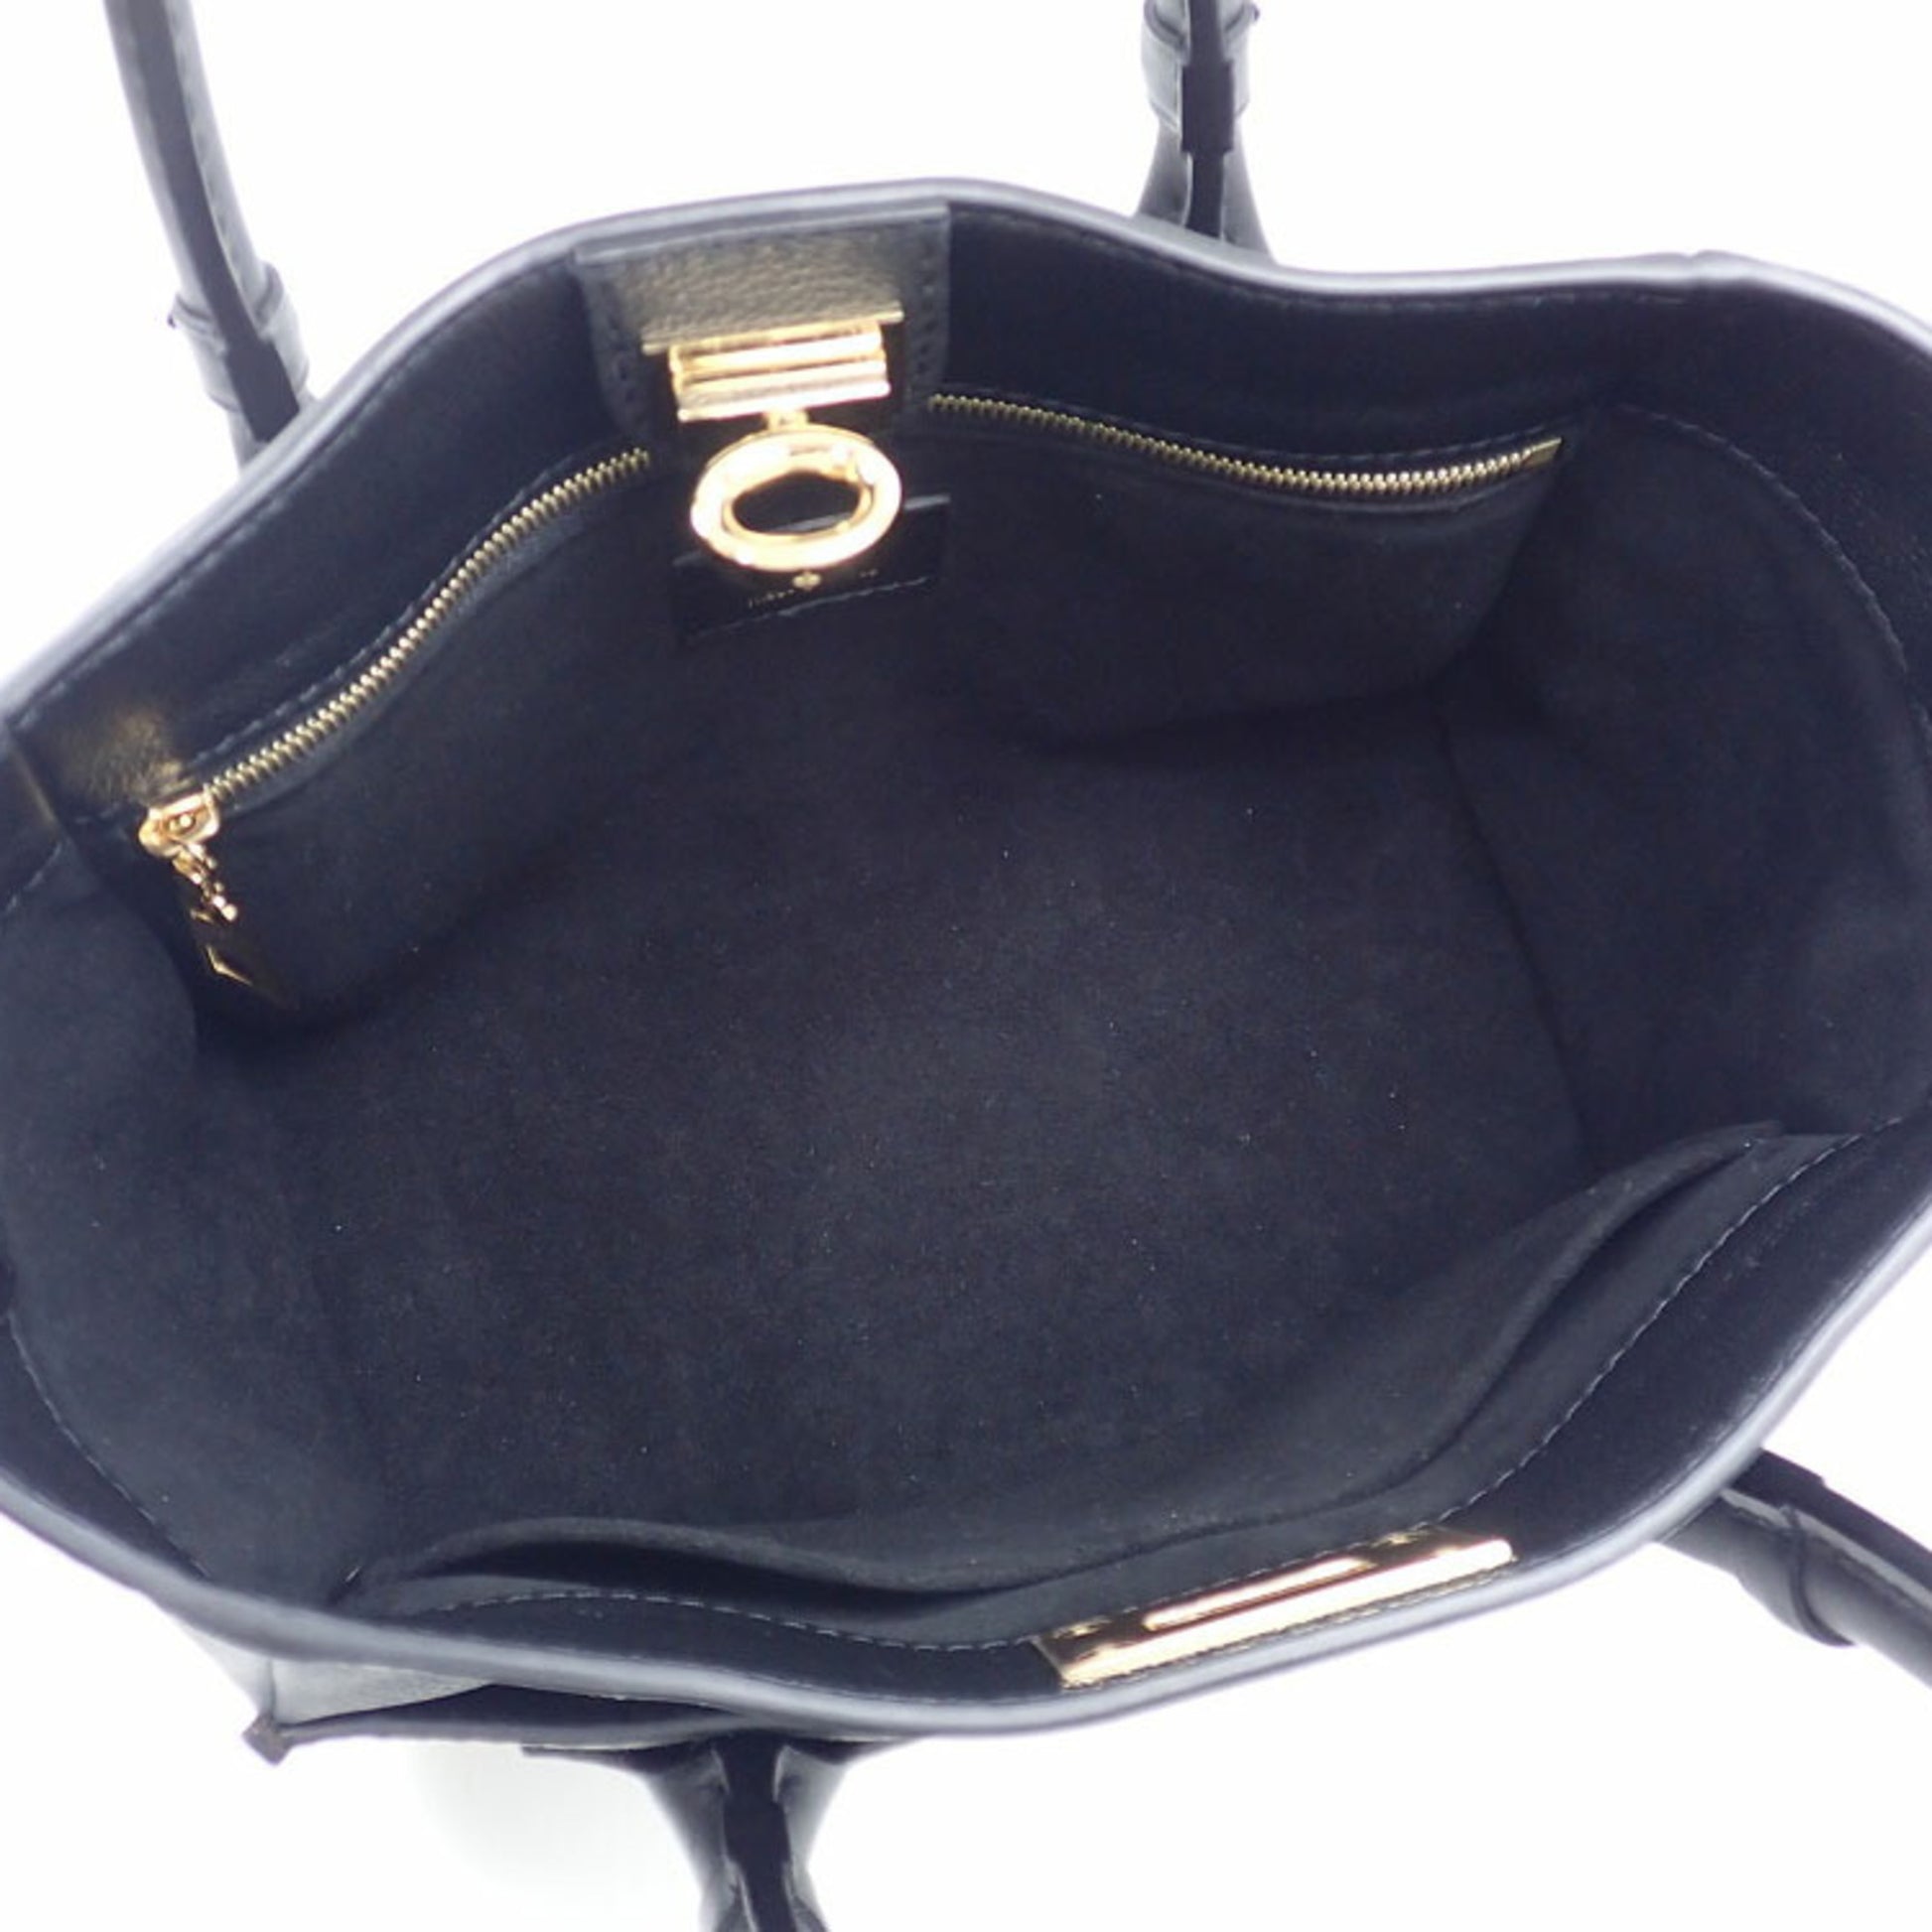  Louis Vuitton M57728 Handbag, On My Side, PM, Black, Black,  NOIR : Clothing, Shoes & Jewelry